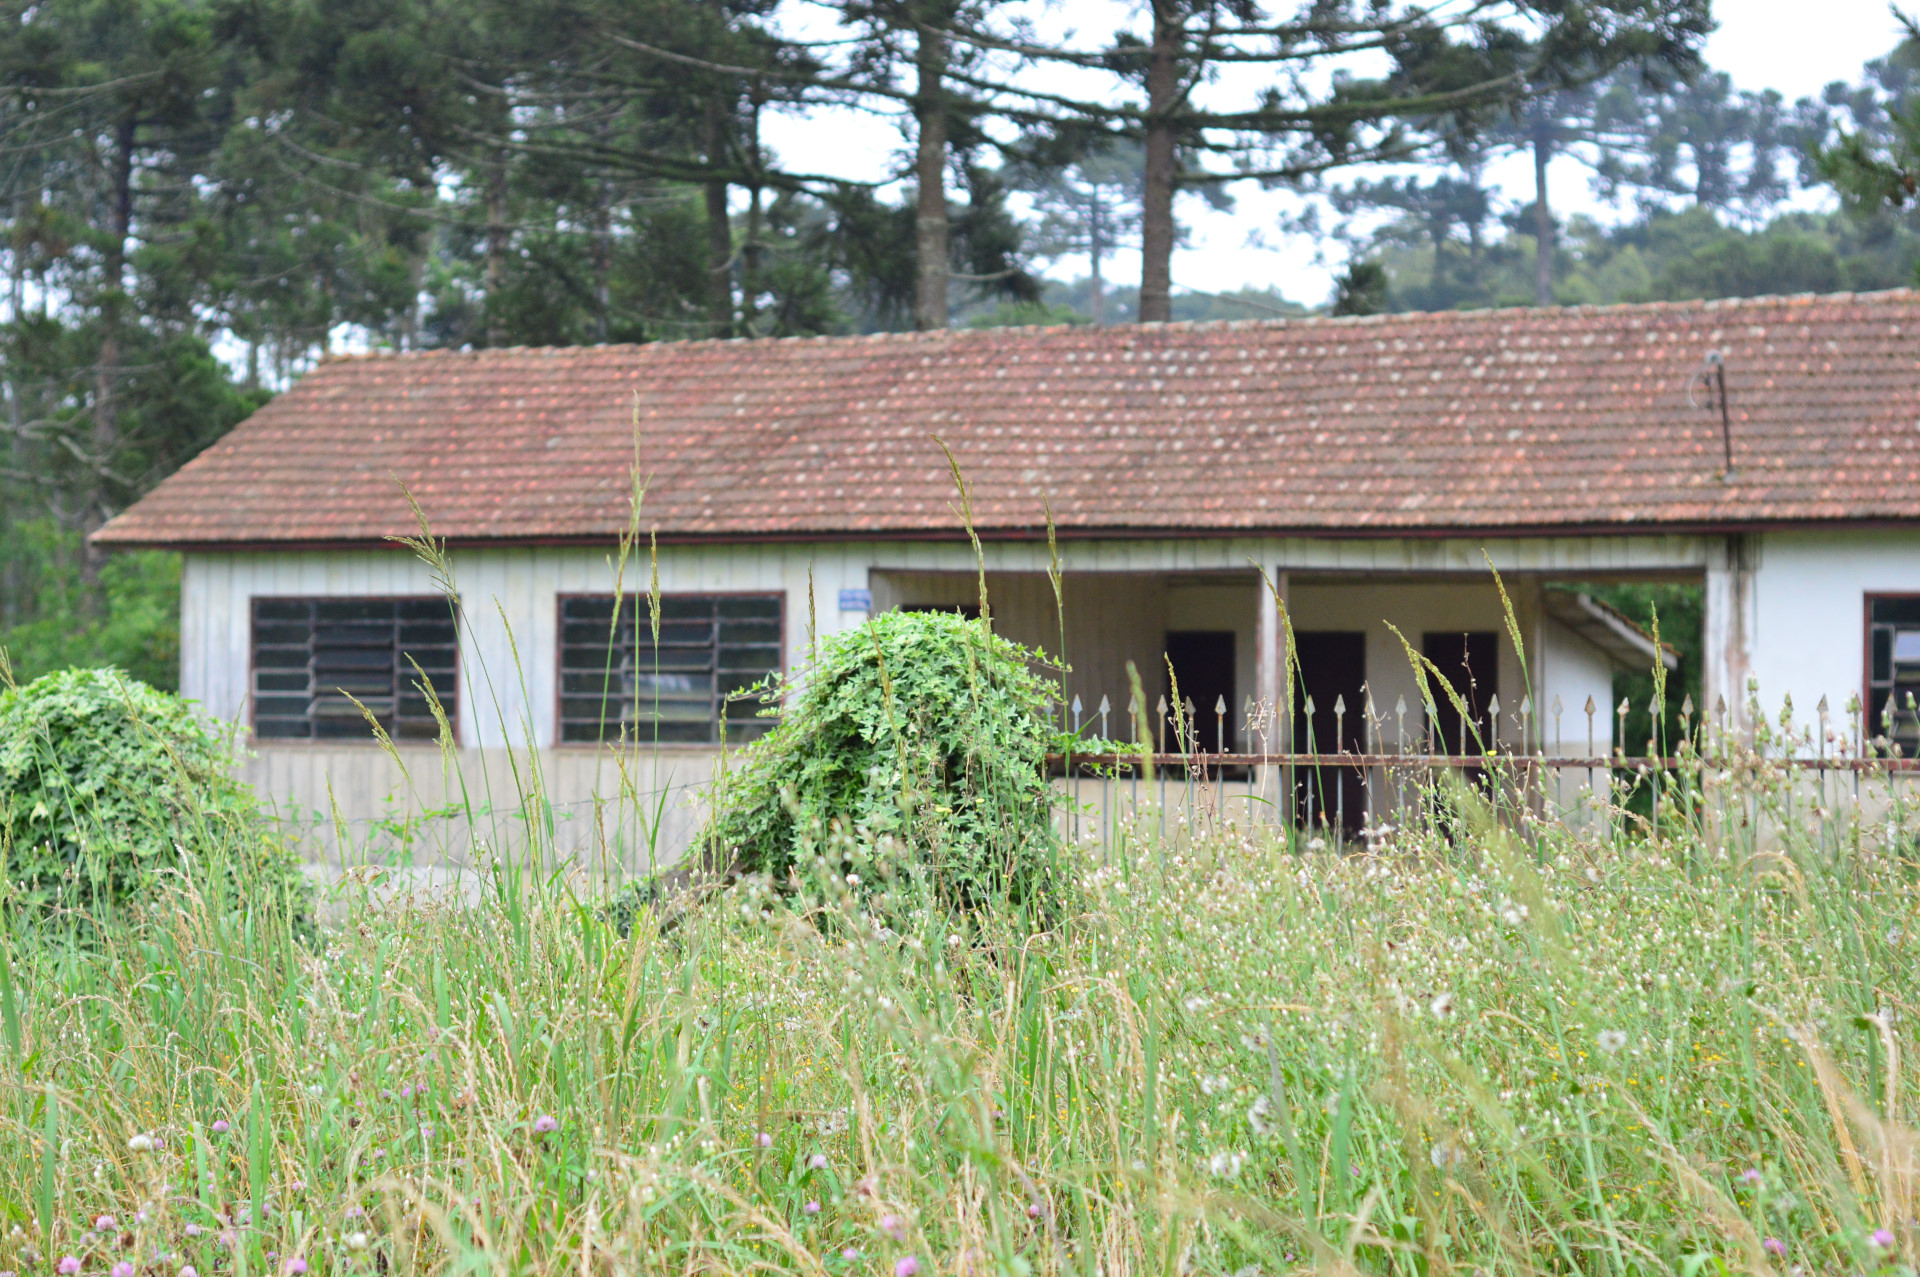 Figura 1: Escola abandonada no interior de Mafra